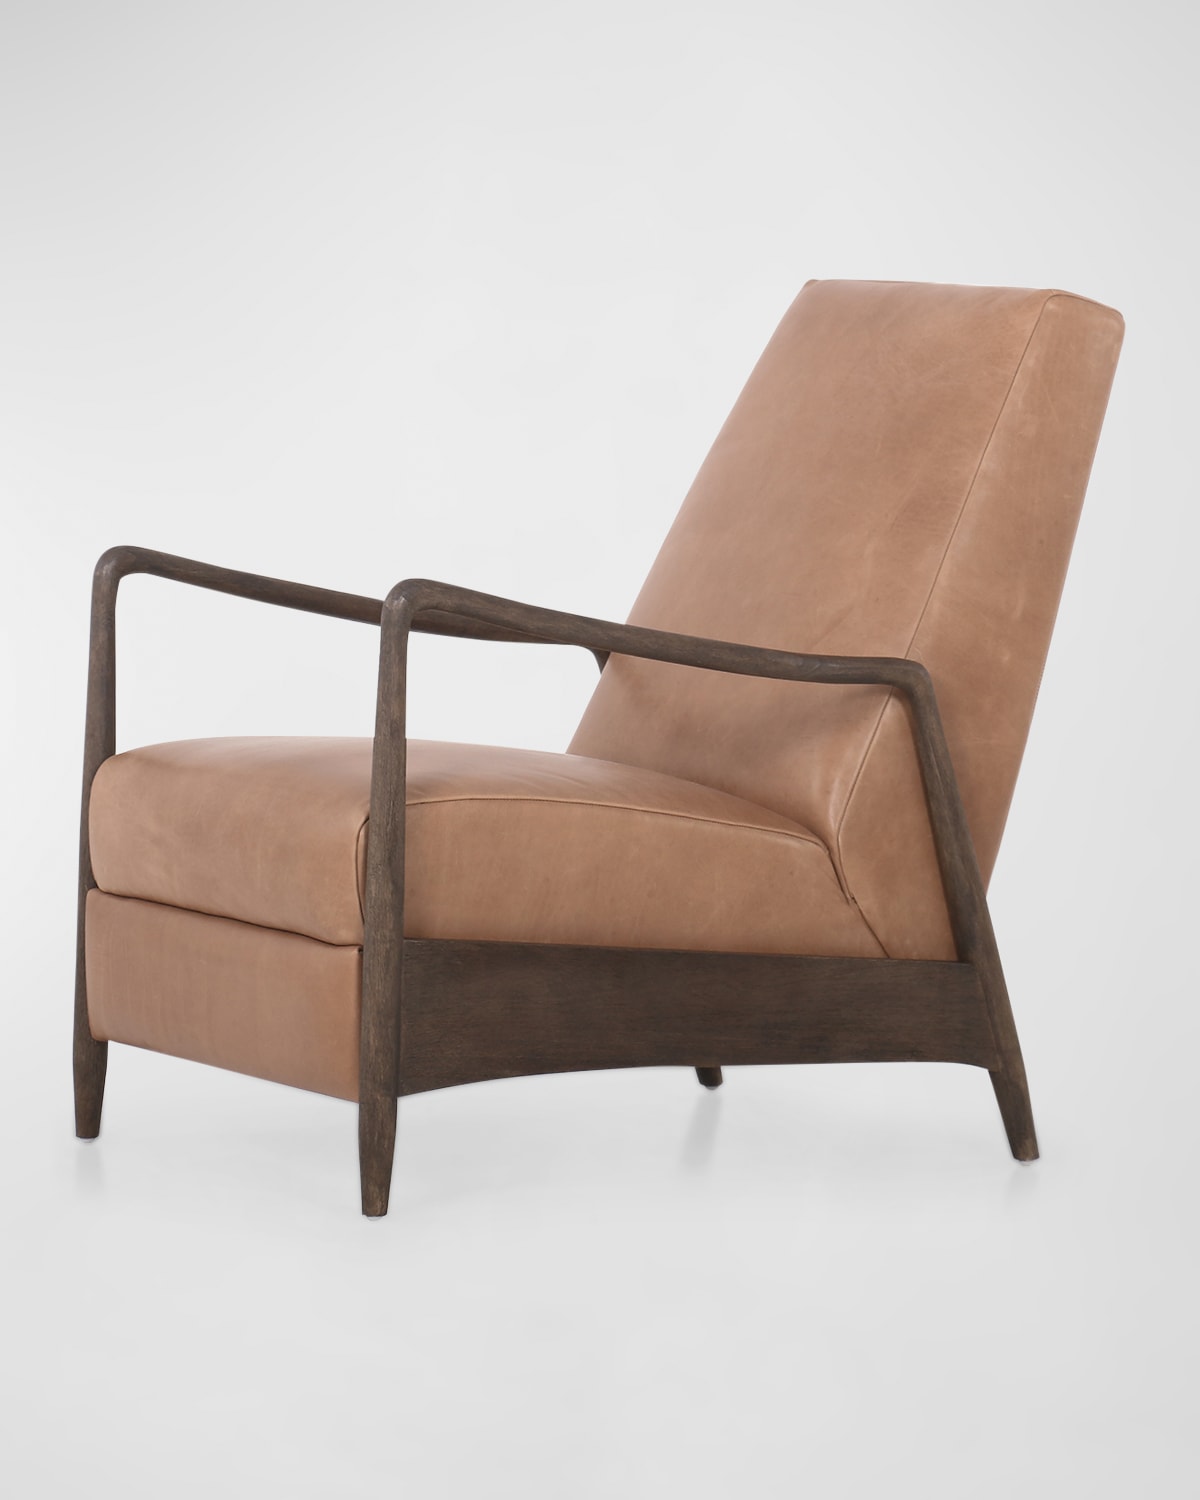 Braden Leather Recliner Chair